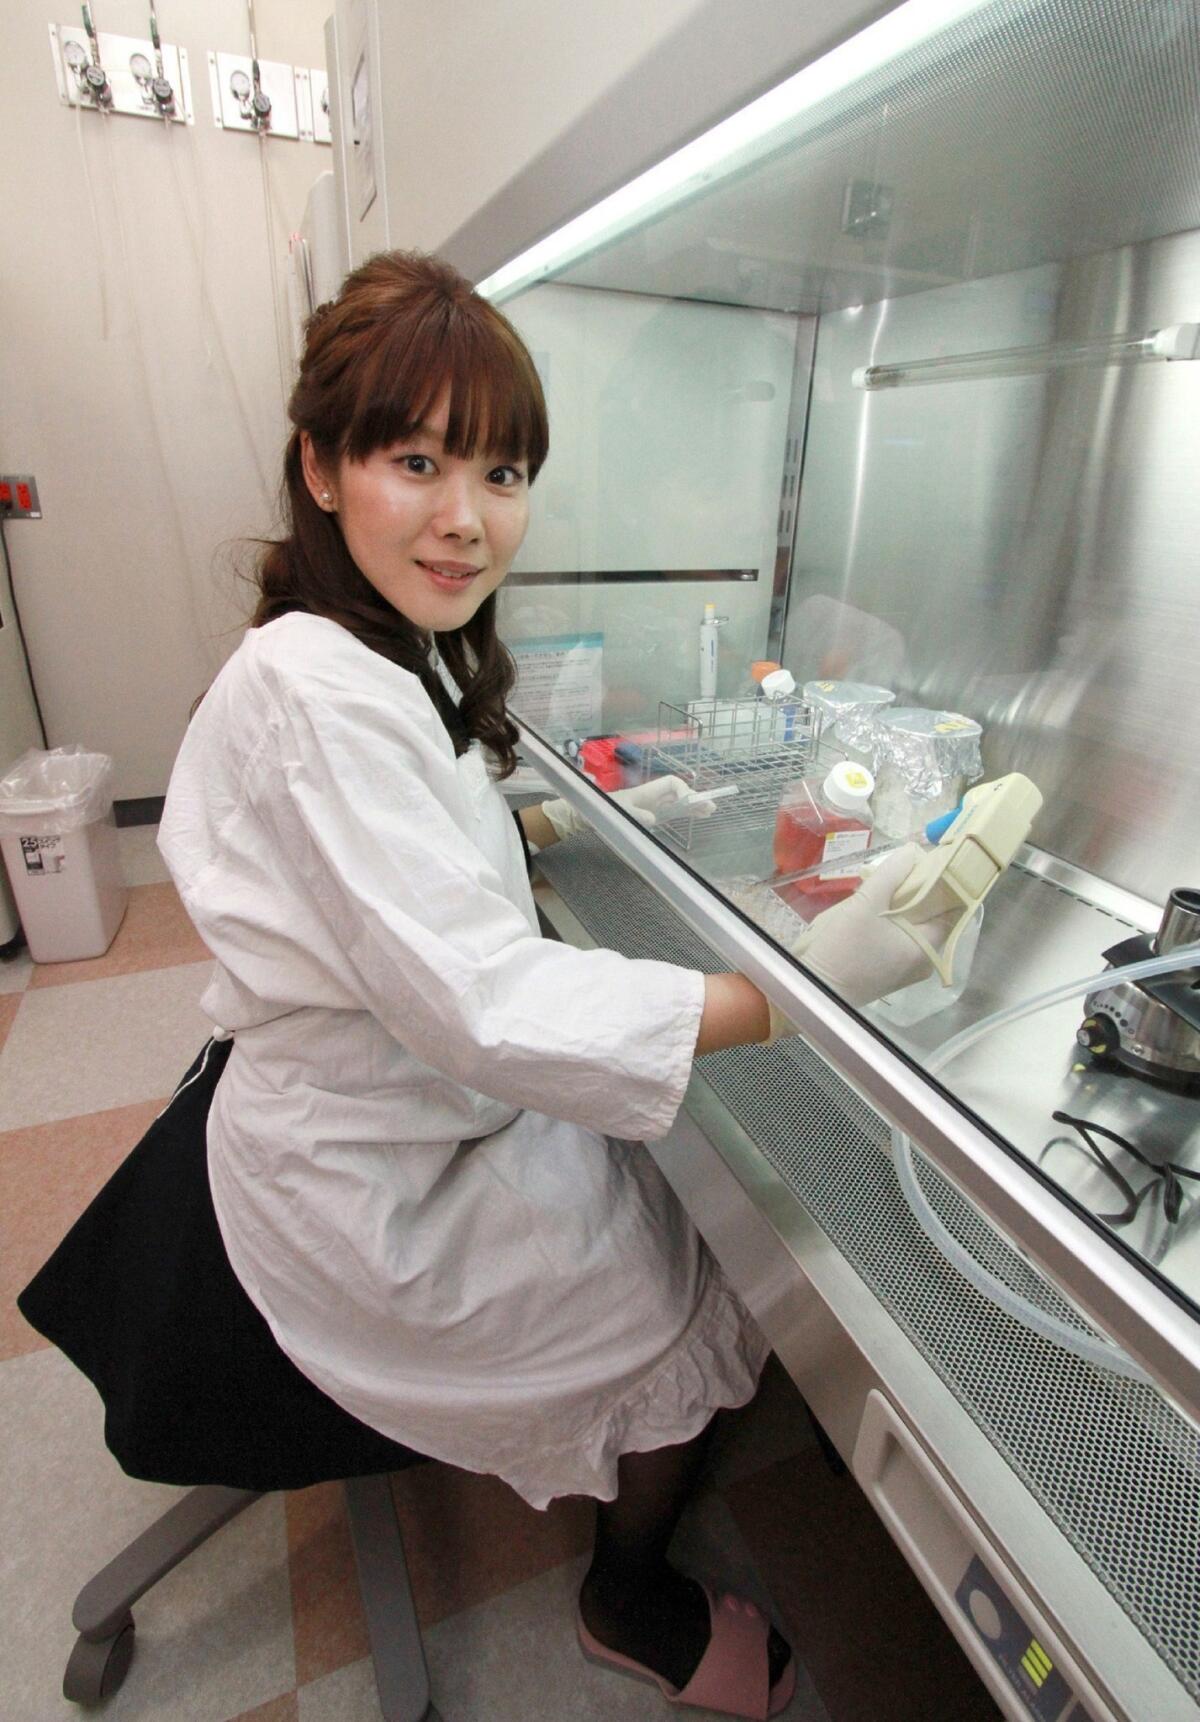 RIKEN researcher Haruko Obokata working at her laboratory.